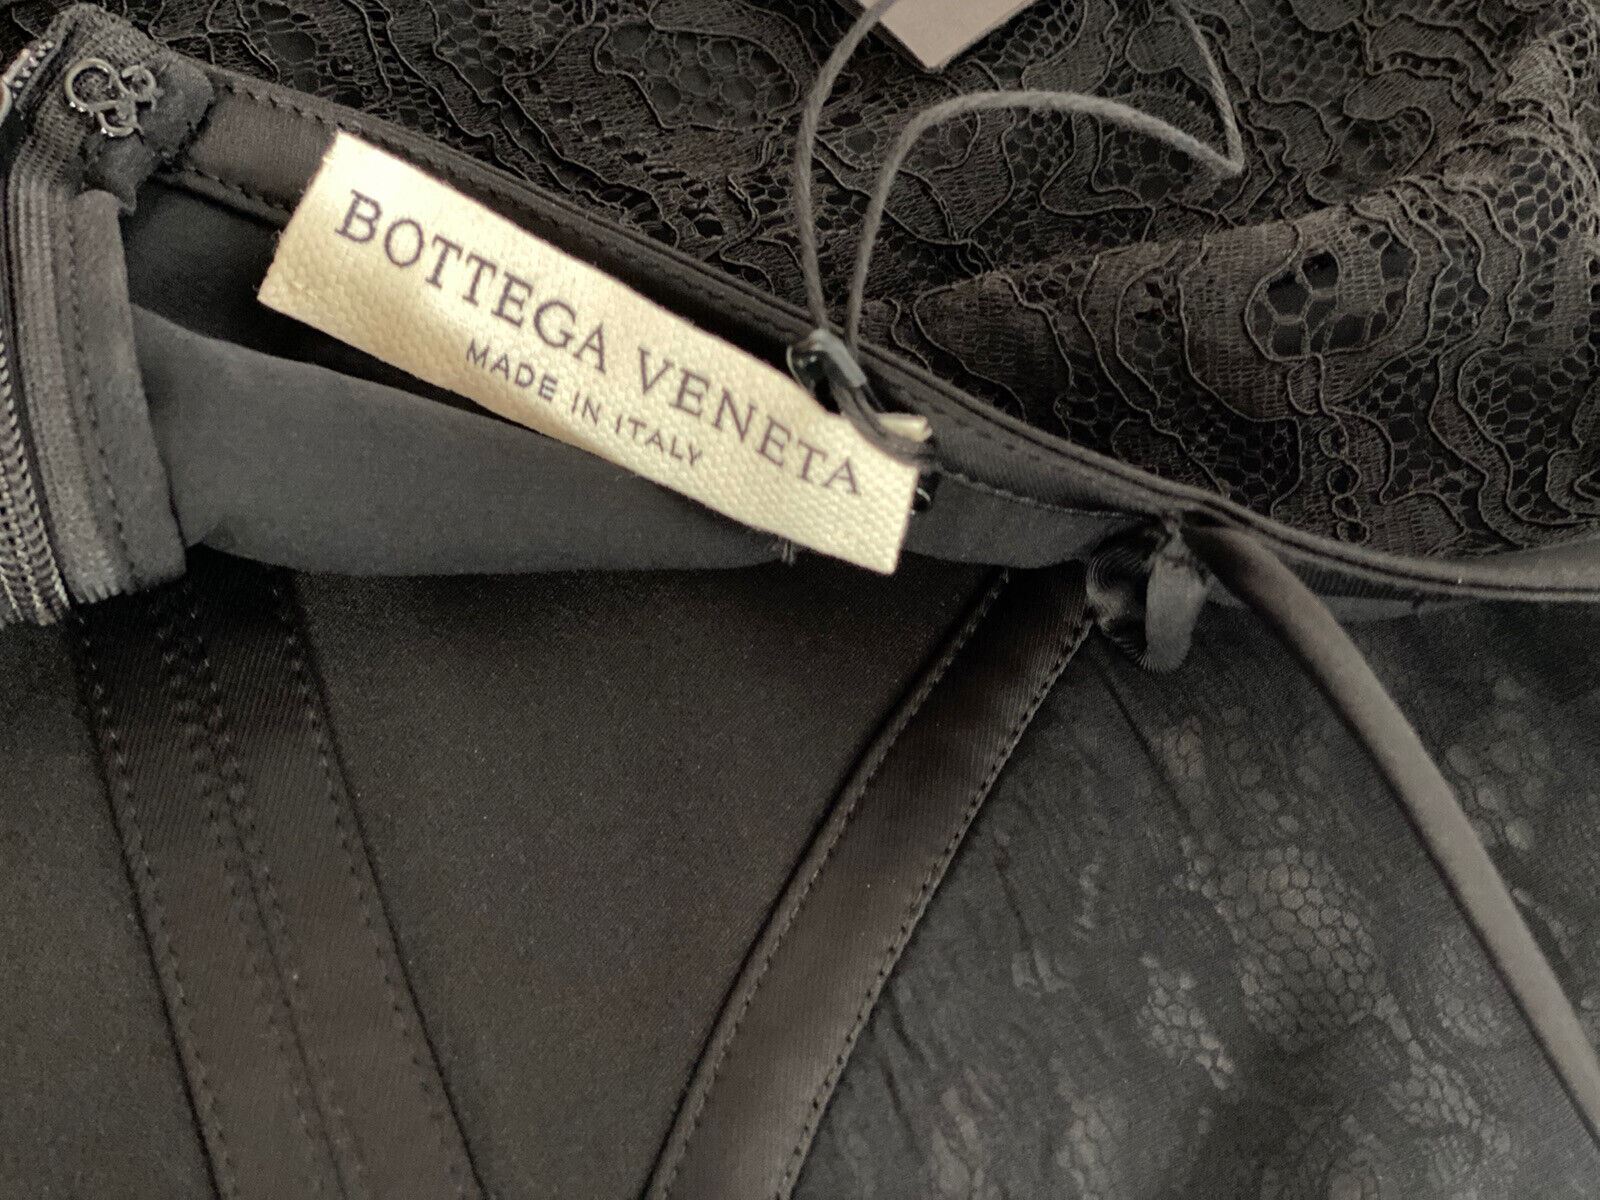 Neu mit Etikett: 2380 $ Bottega Veneta Schwarzes Schlafkleid für Damen 6 US (42 Bottega) 605980 IT